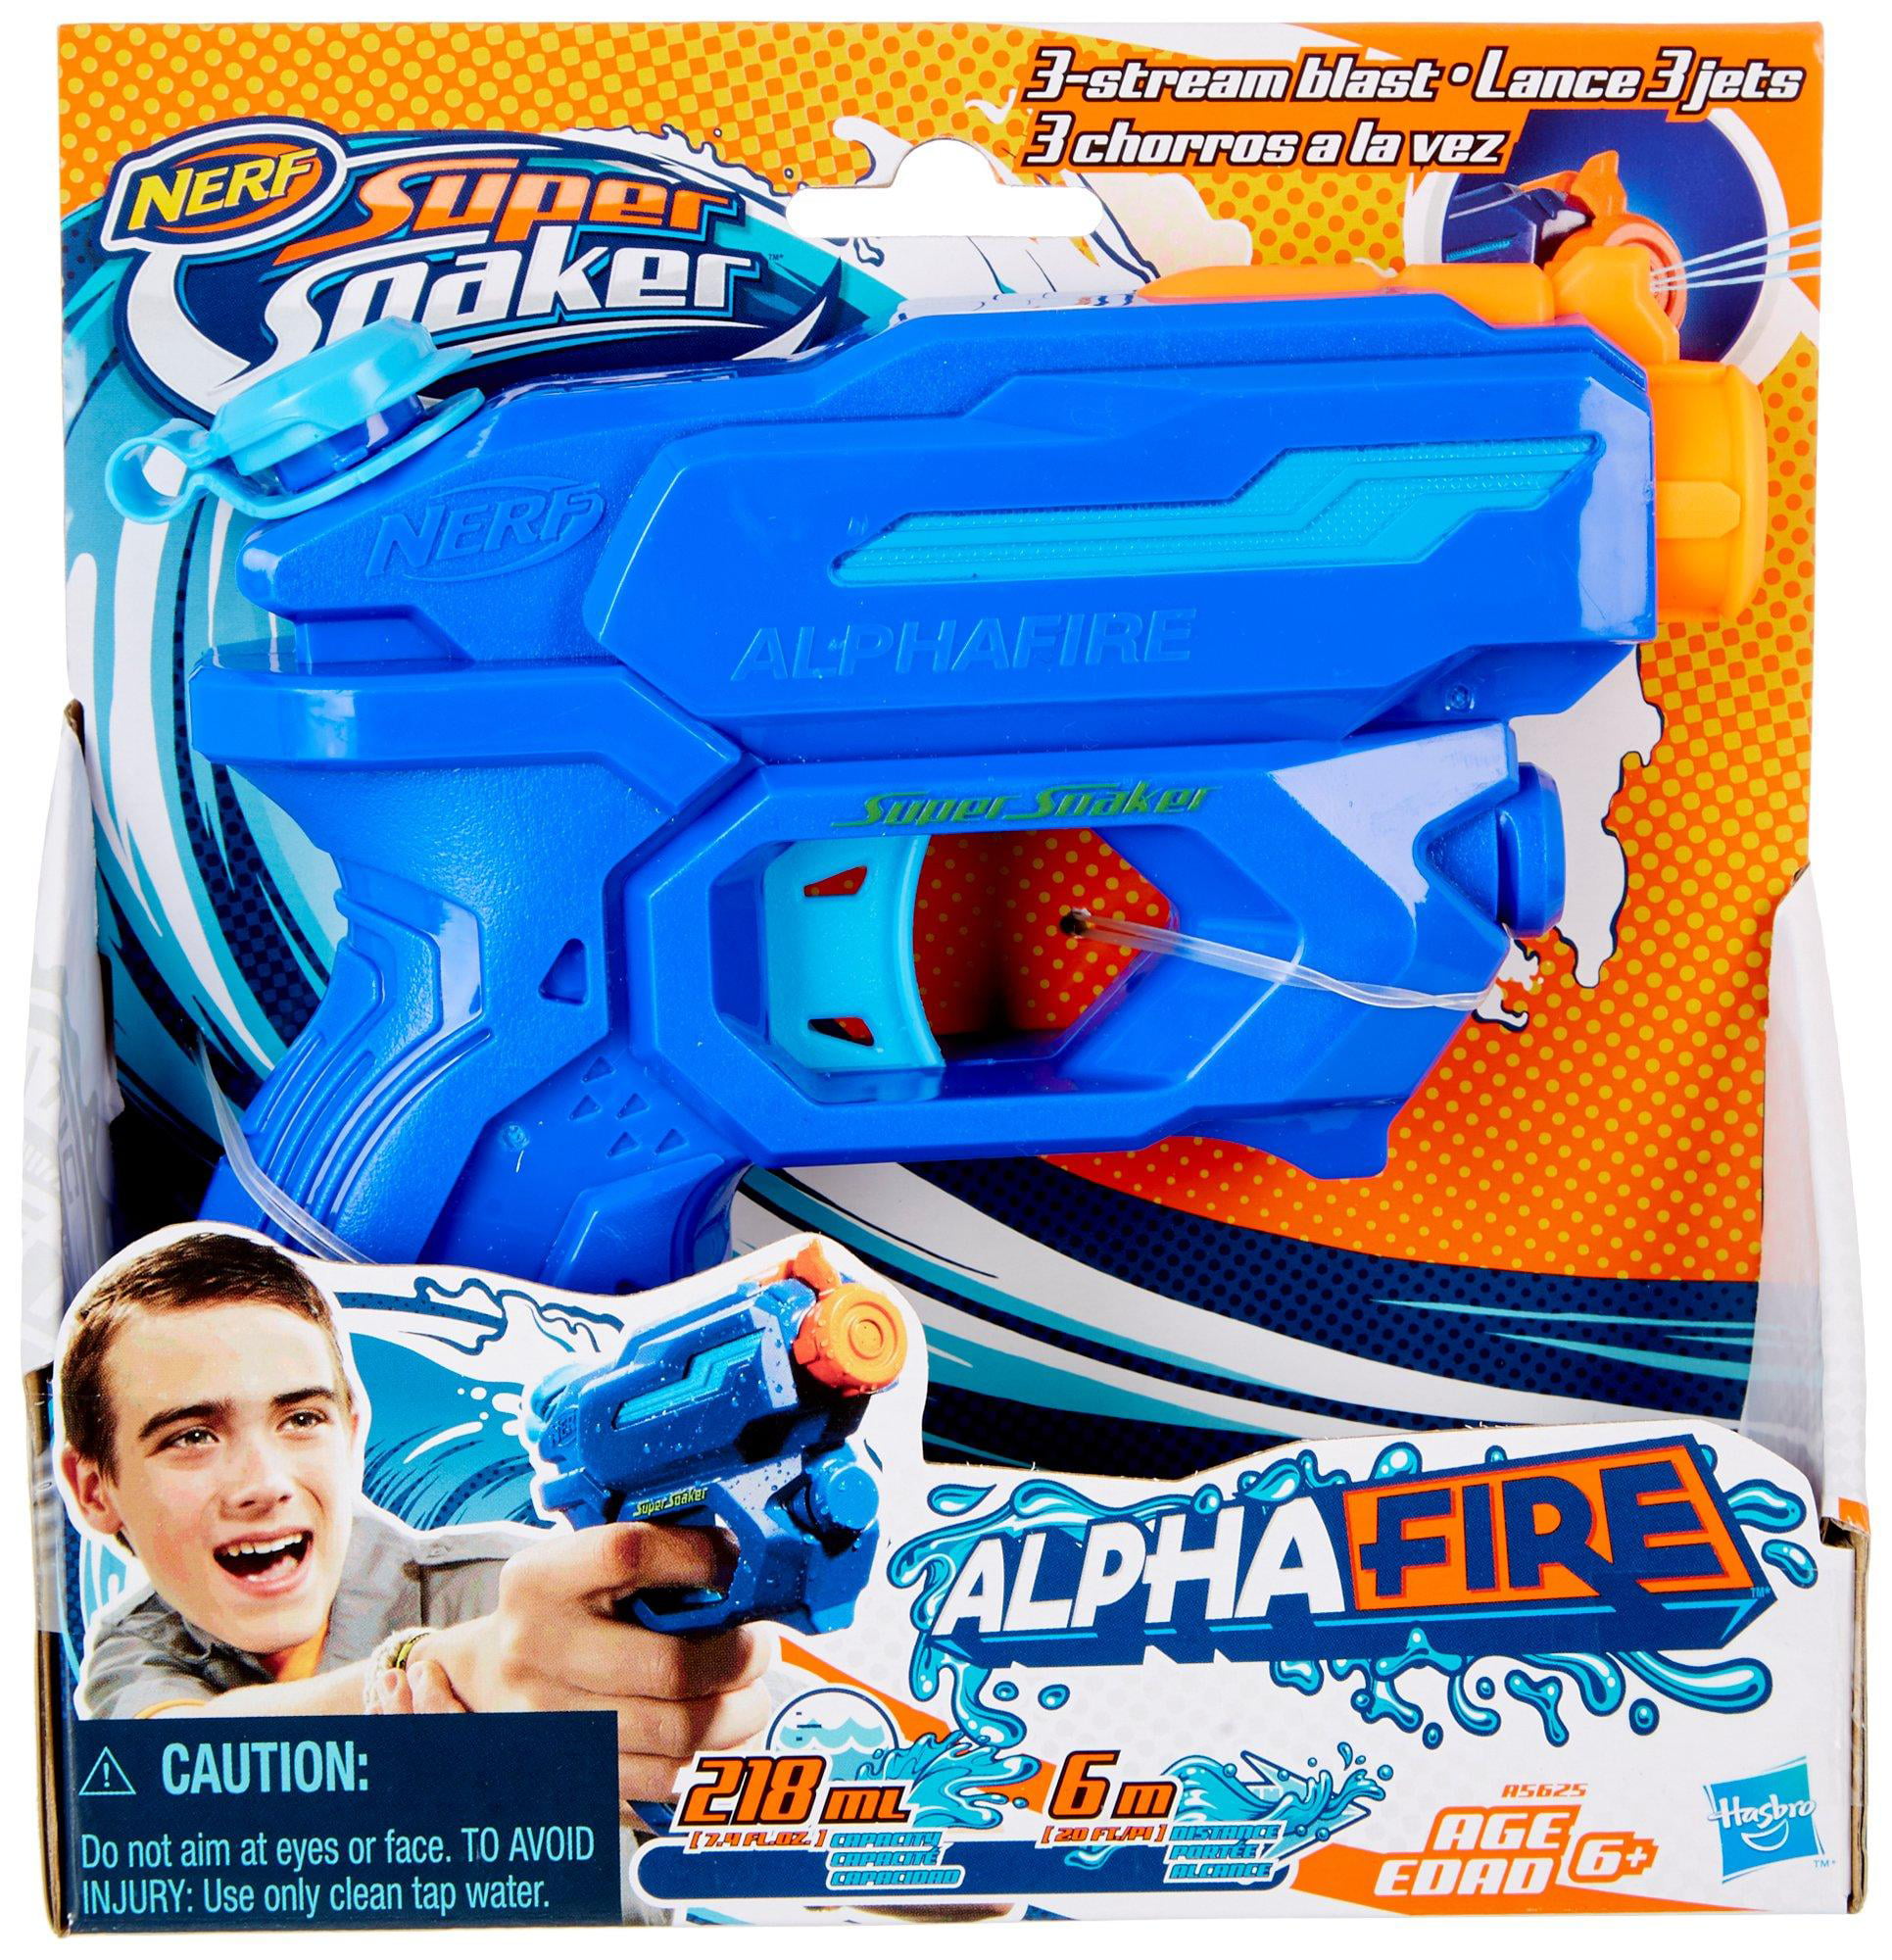 Nerf super soaker alphafire 3-stream water blasting water pistols outdoor toy 